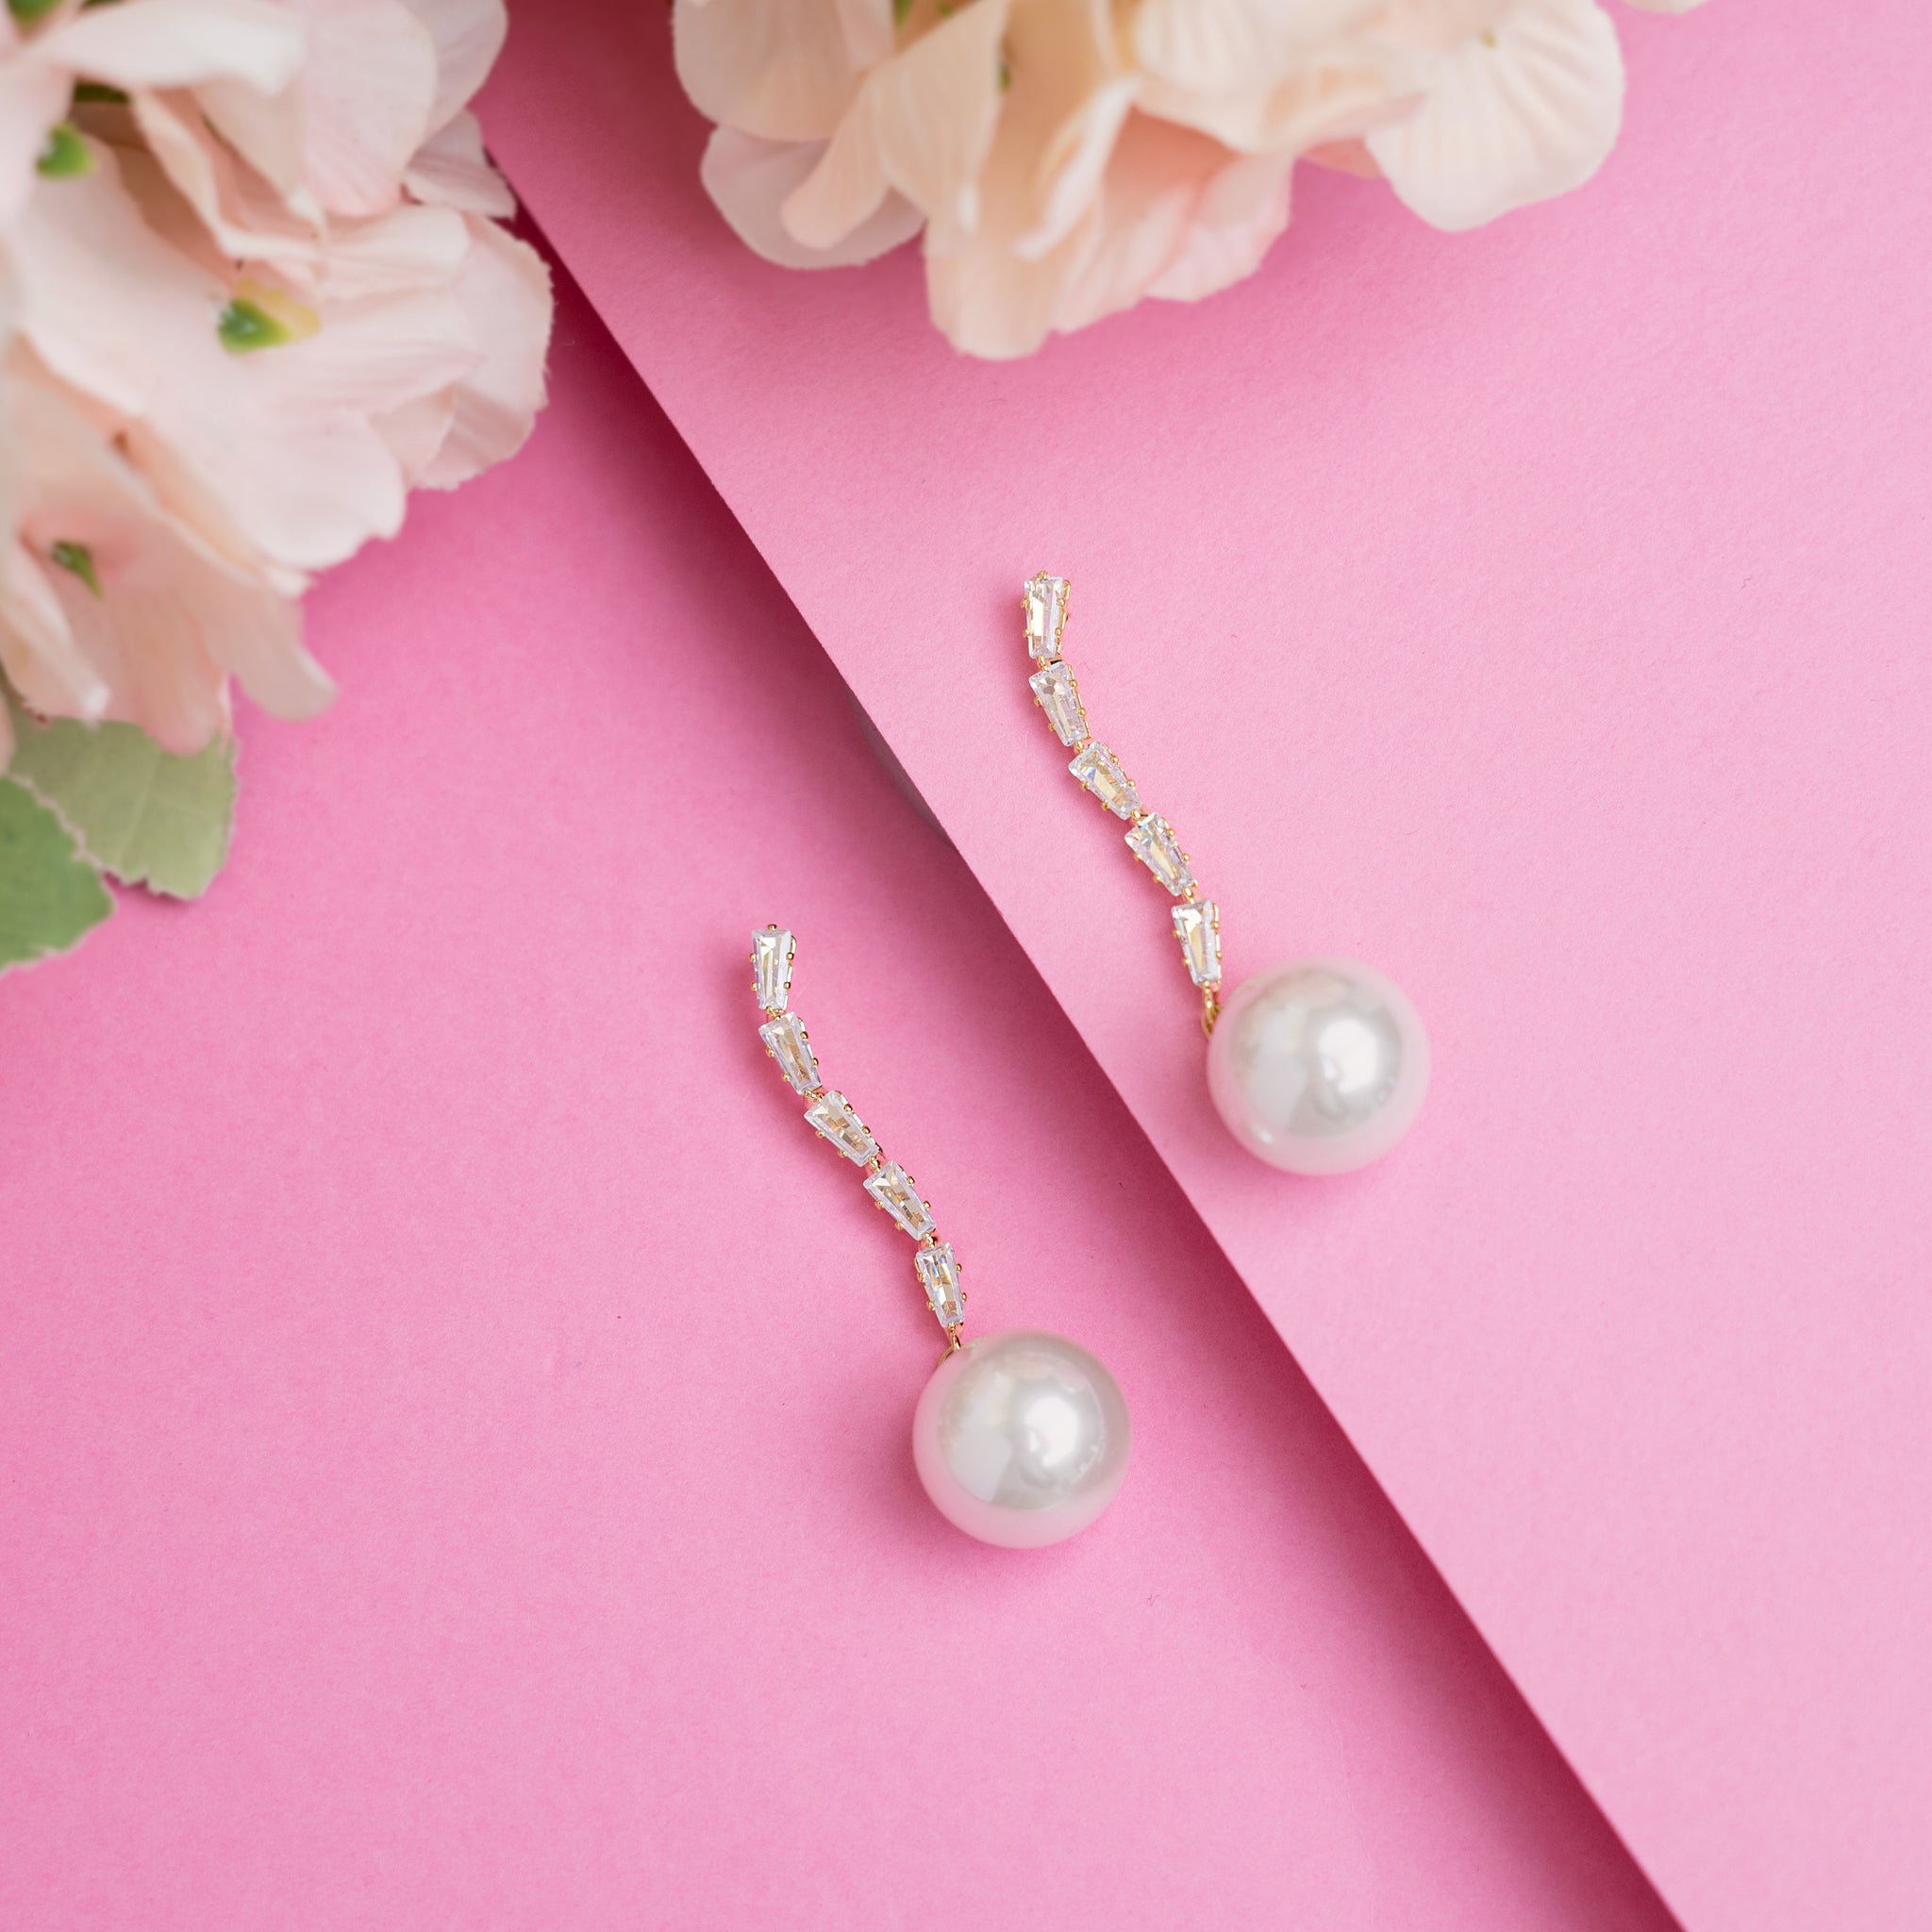 Pearly diamond earrings